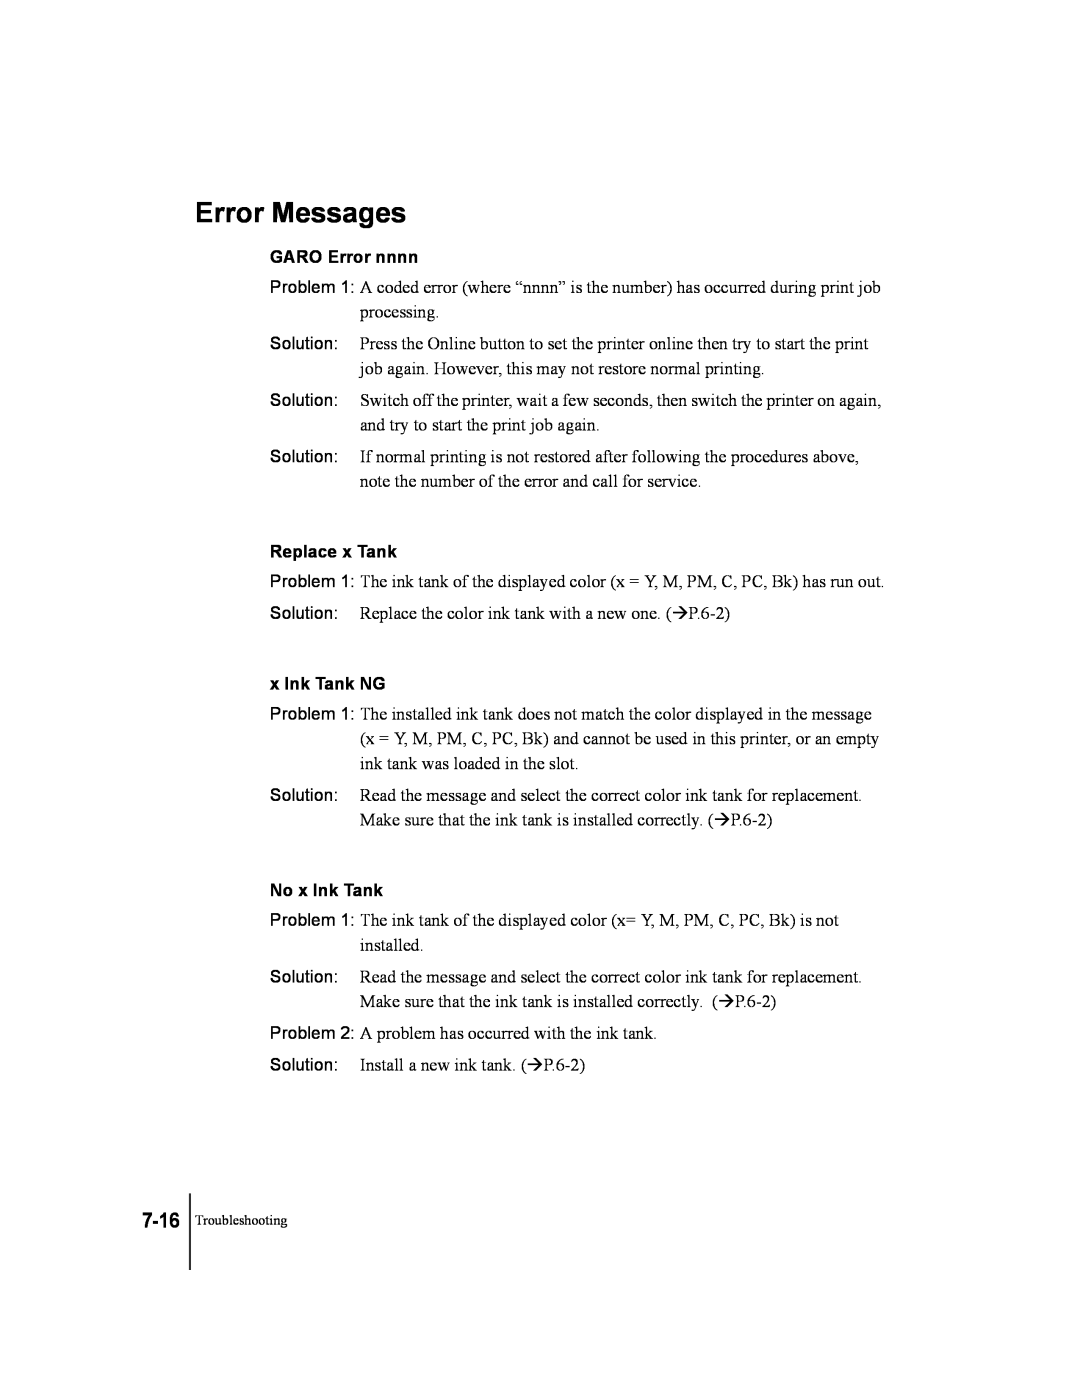 Canon W2200 manual Error Messages, 7-16, GARO Error nnnn, Replace x Tank, x Ink Tank NG, No x Ink Tank 